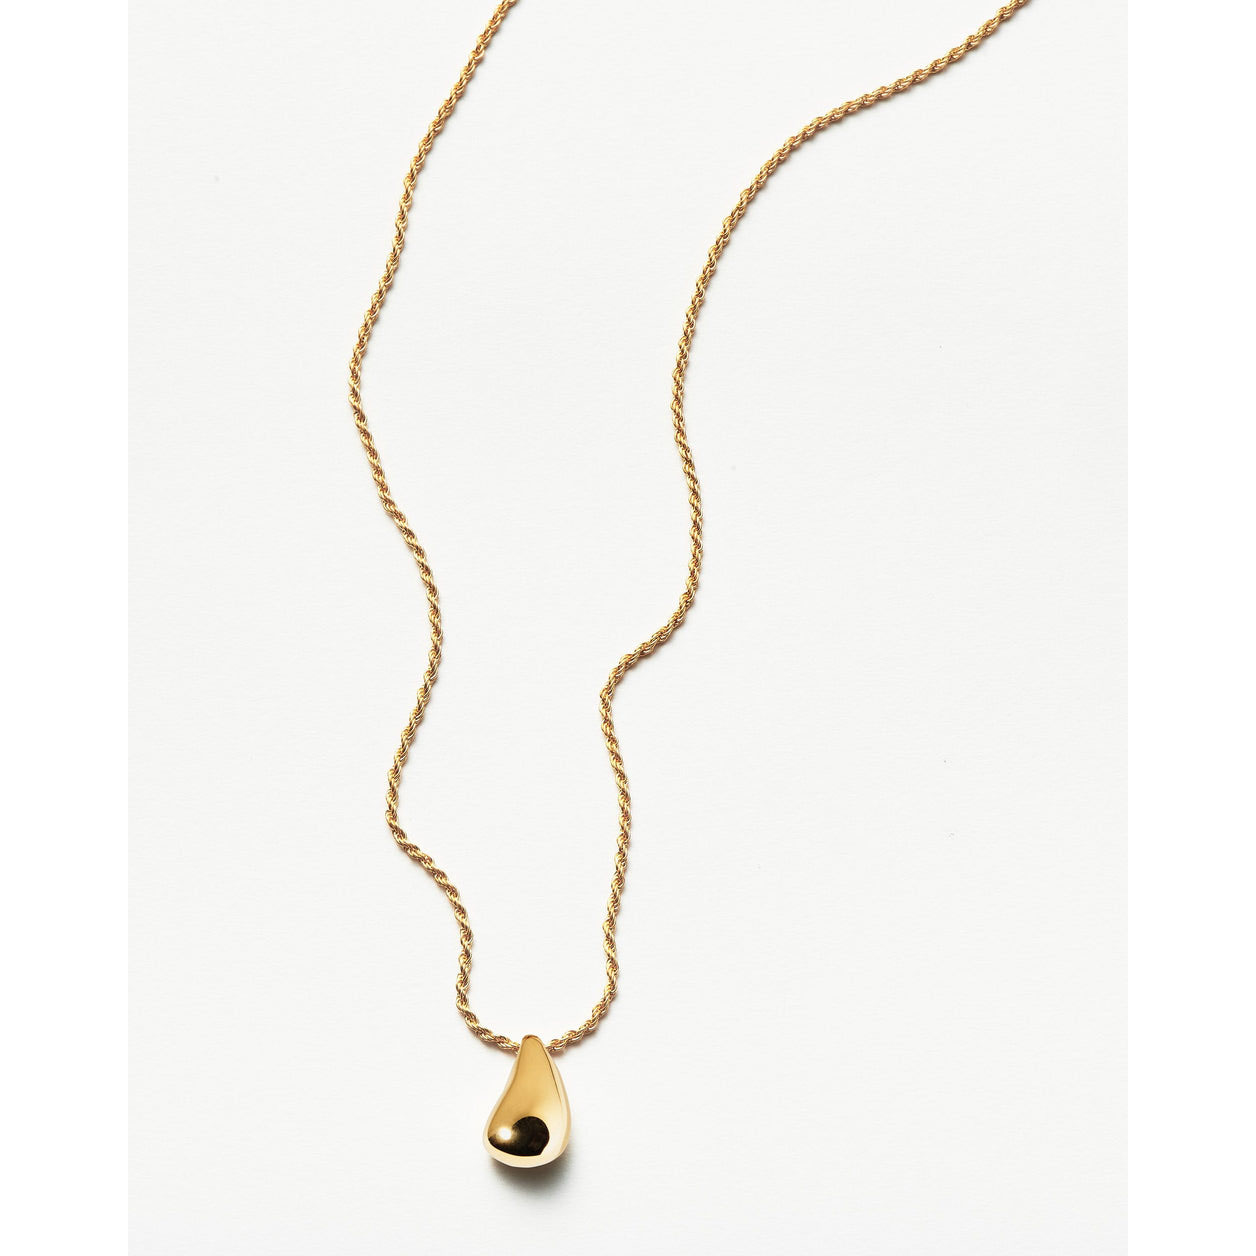 Kustom grosir perhiasan savi sculptural droplet pendant necklace18k berlapis emas vermeil